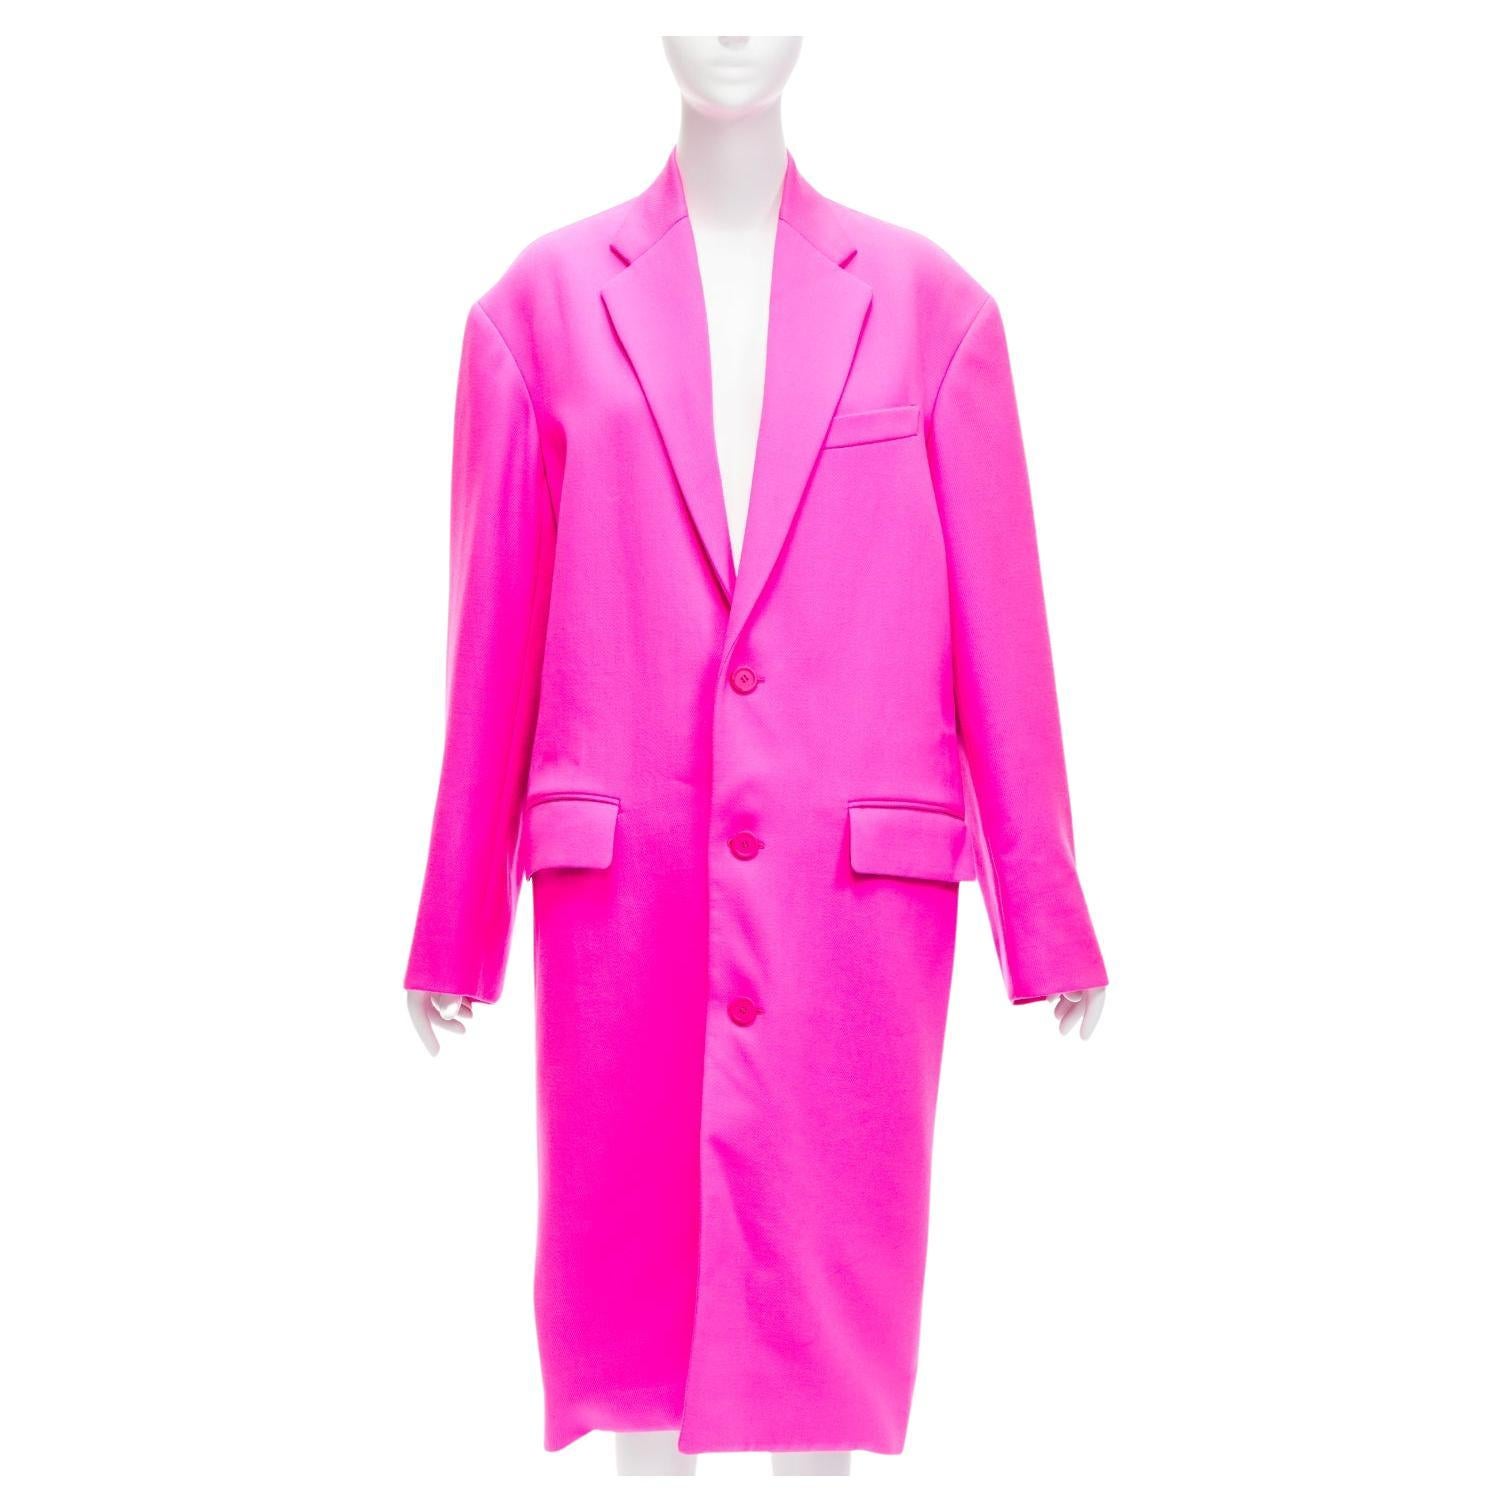 BALENCIAGA manteau long en laine rose cavalier surdimensionné FR34 XS Hailey Beiber en vente